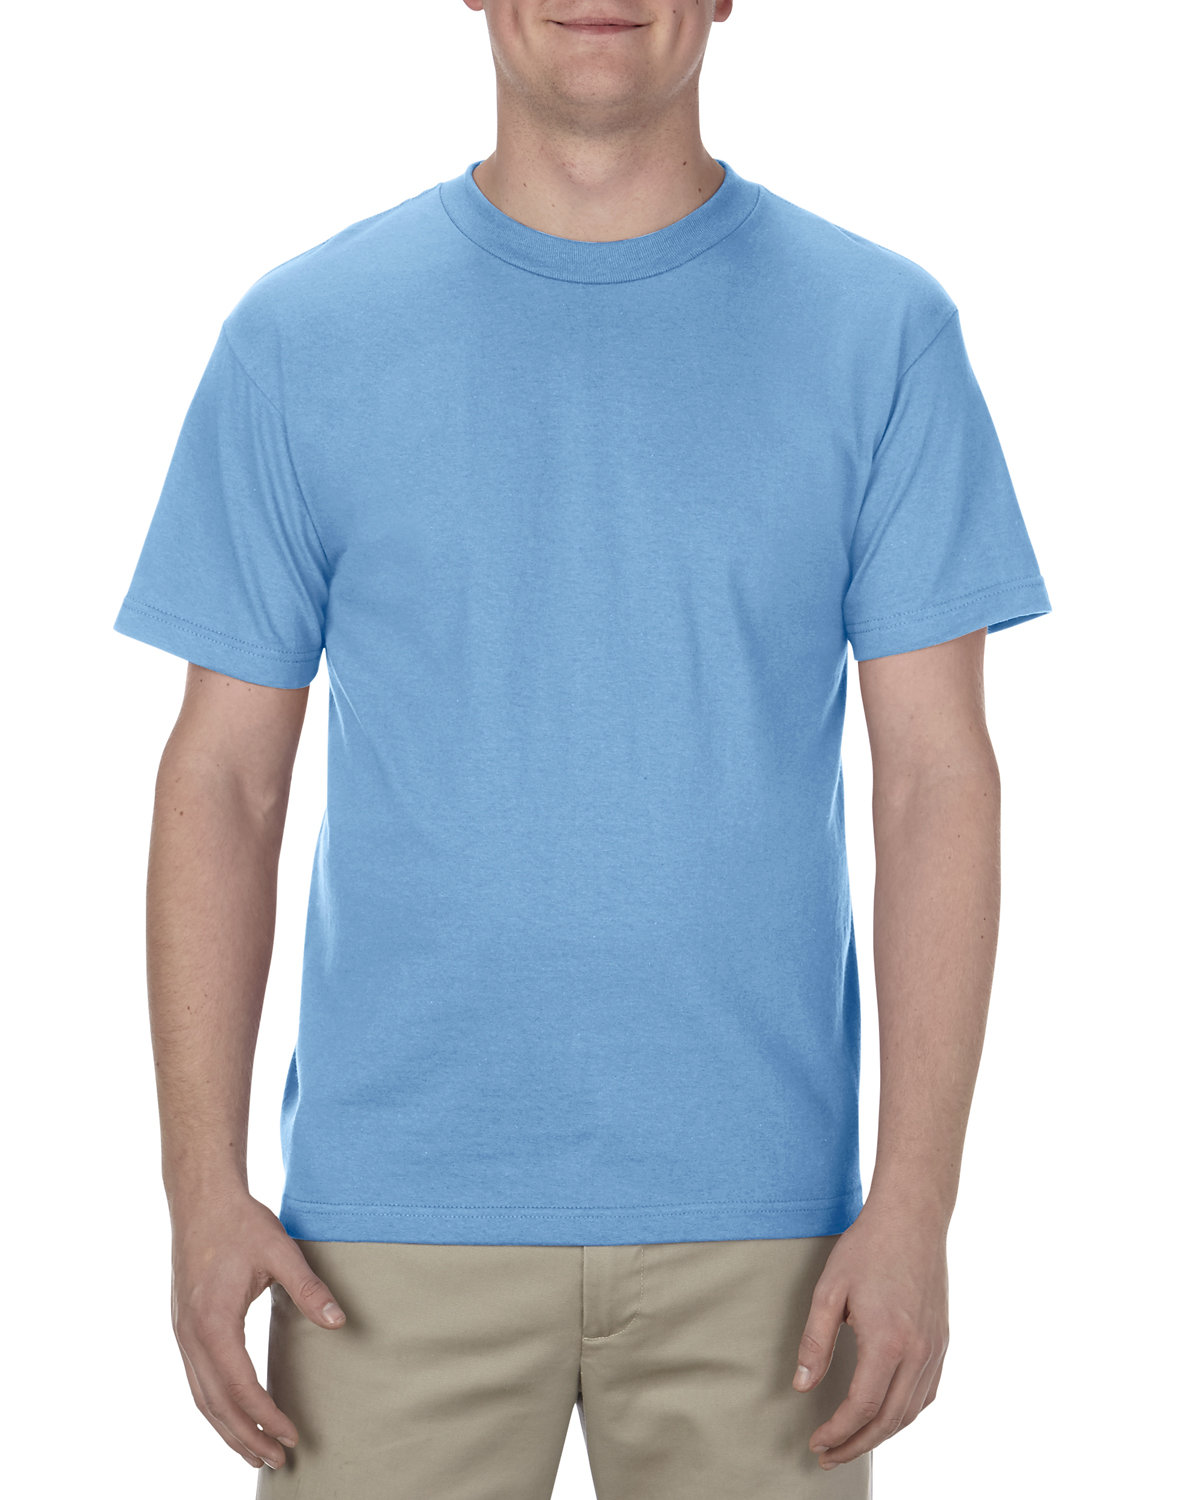 American Apparel Unisex Heavyweight Cotton T-Shirt carolina blue 